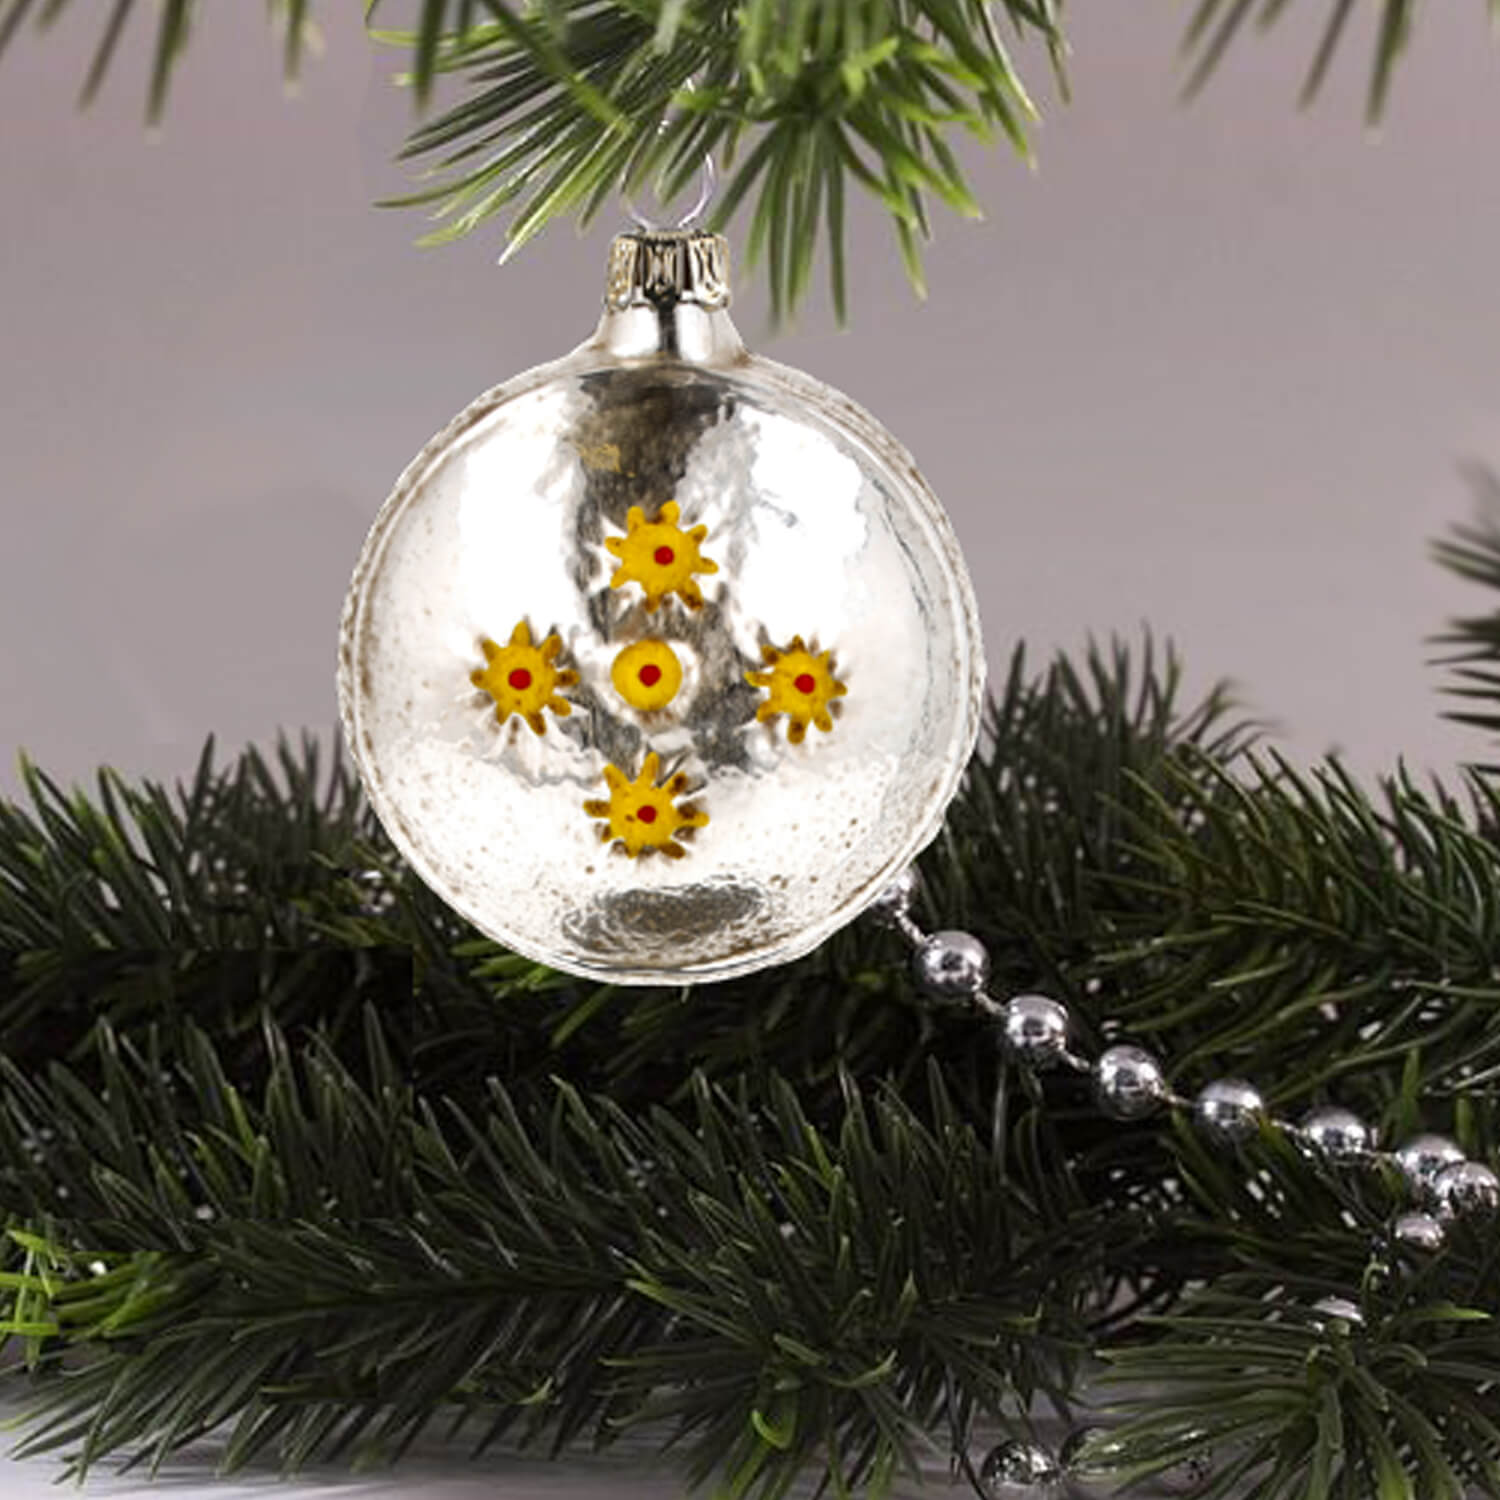 MAROLIN® - Glass ornament "Ball with tree and stars"